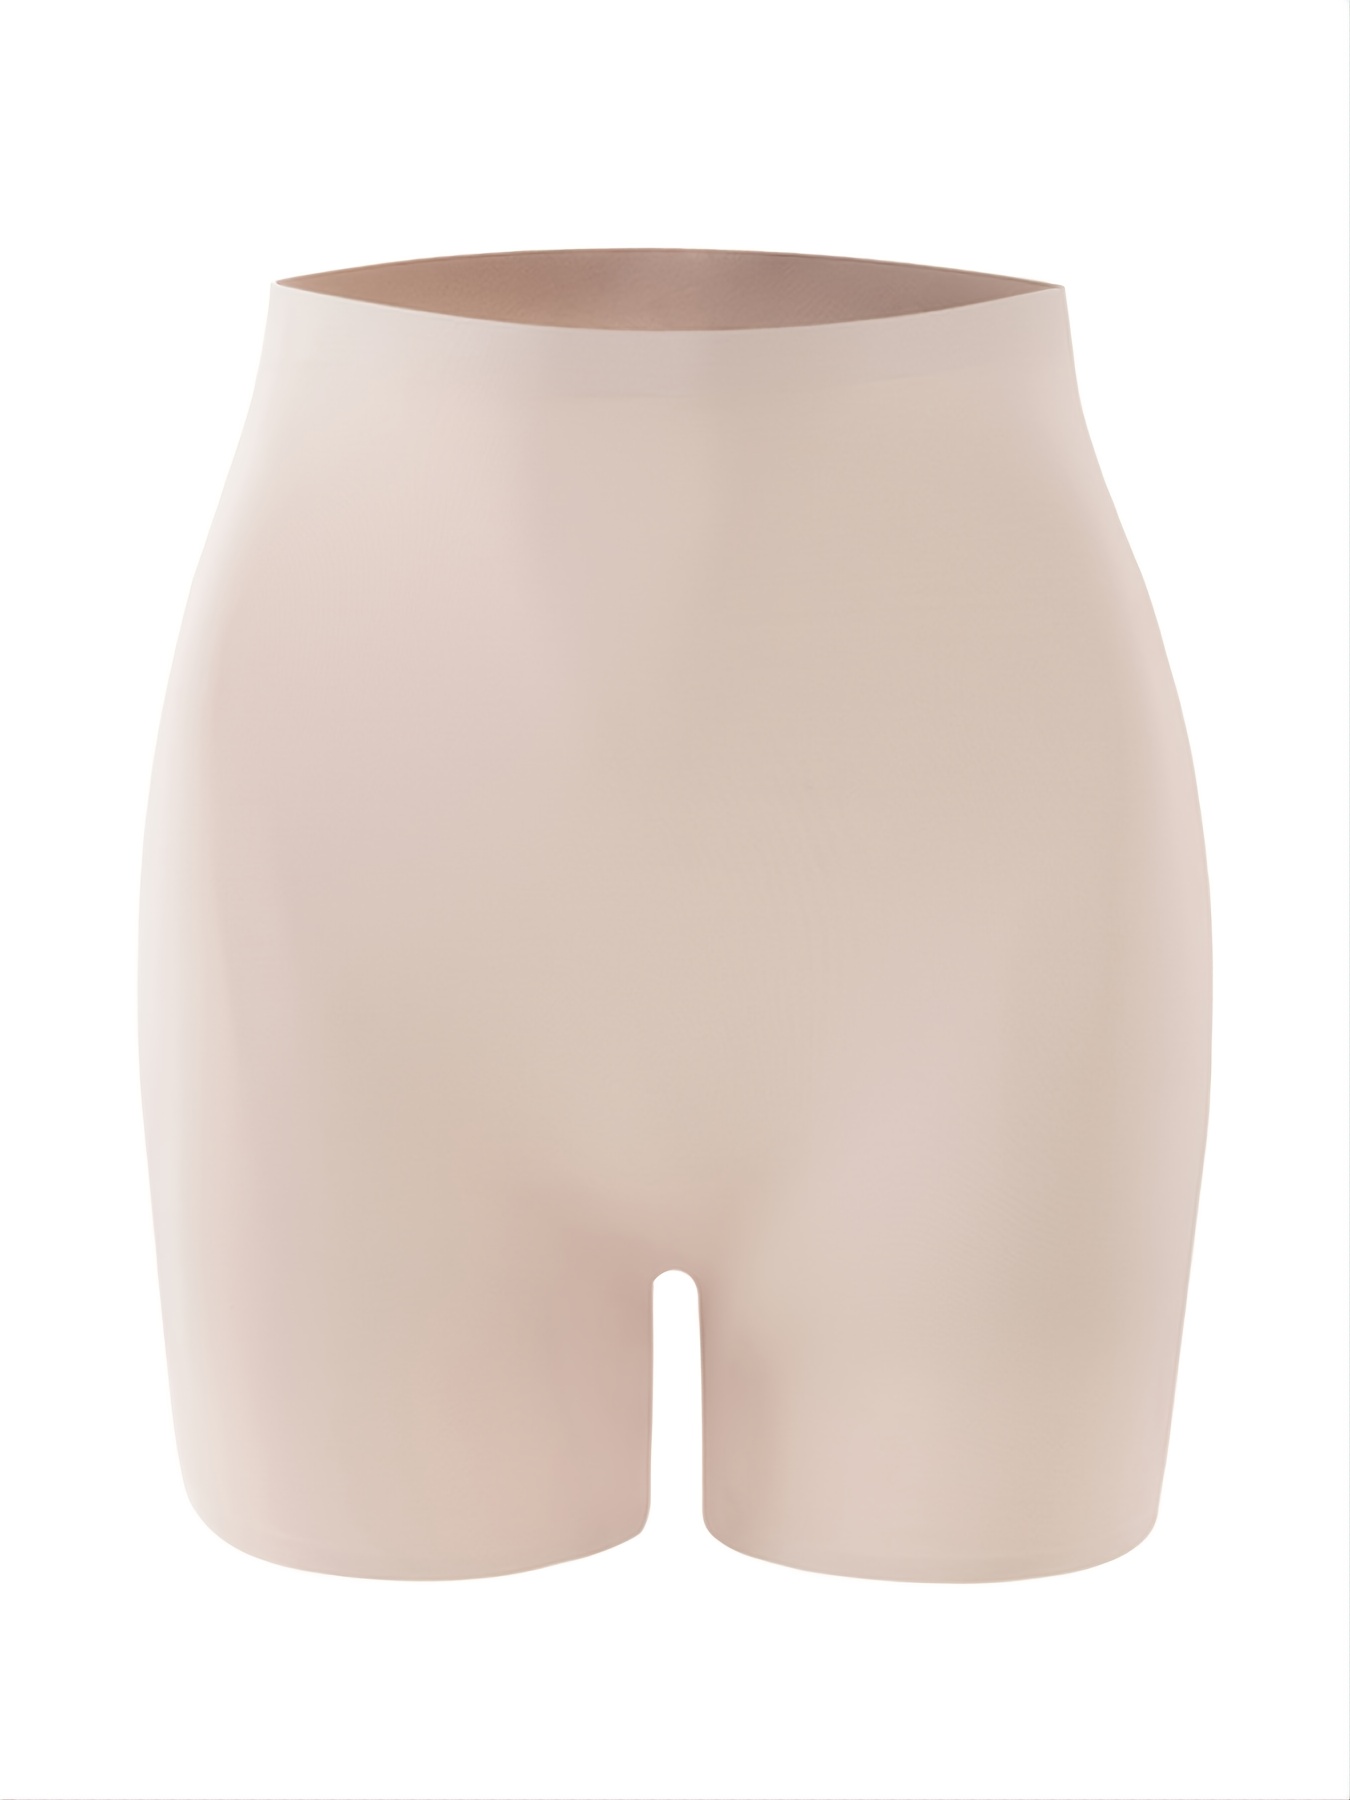 Tummy Control Shapewear Shorts For Women High Waisted Body Shaper Shaping Underwear  Slip Shorts Under Dresses